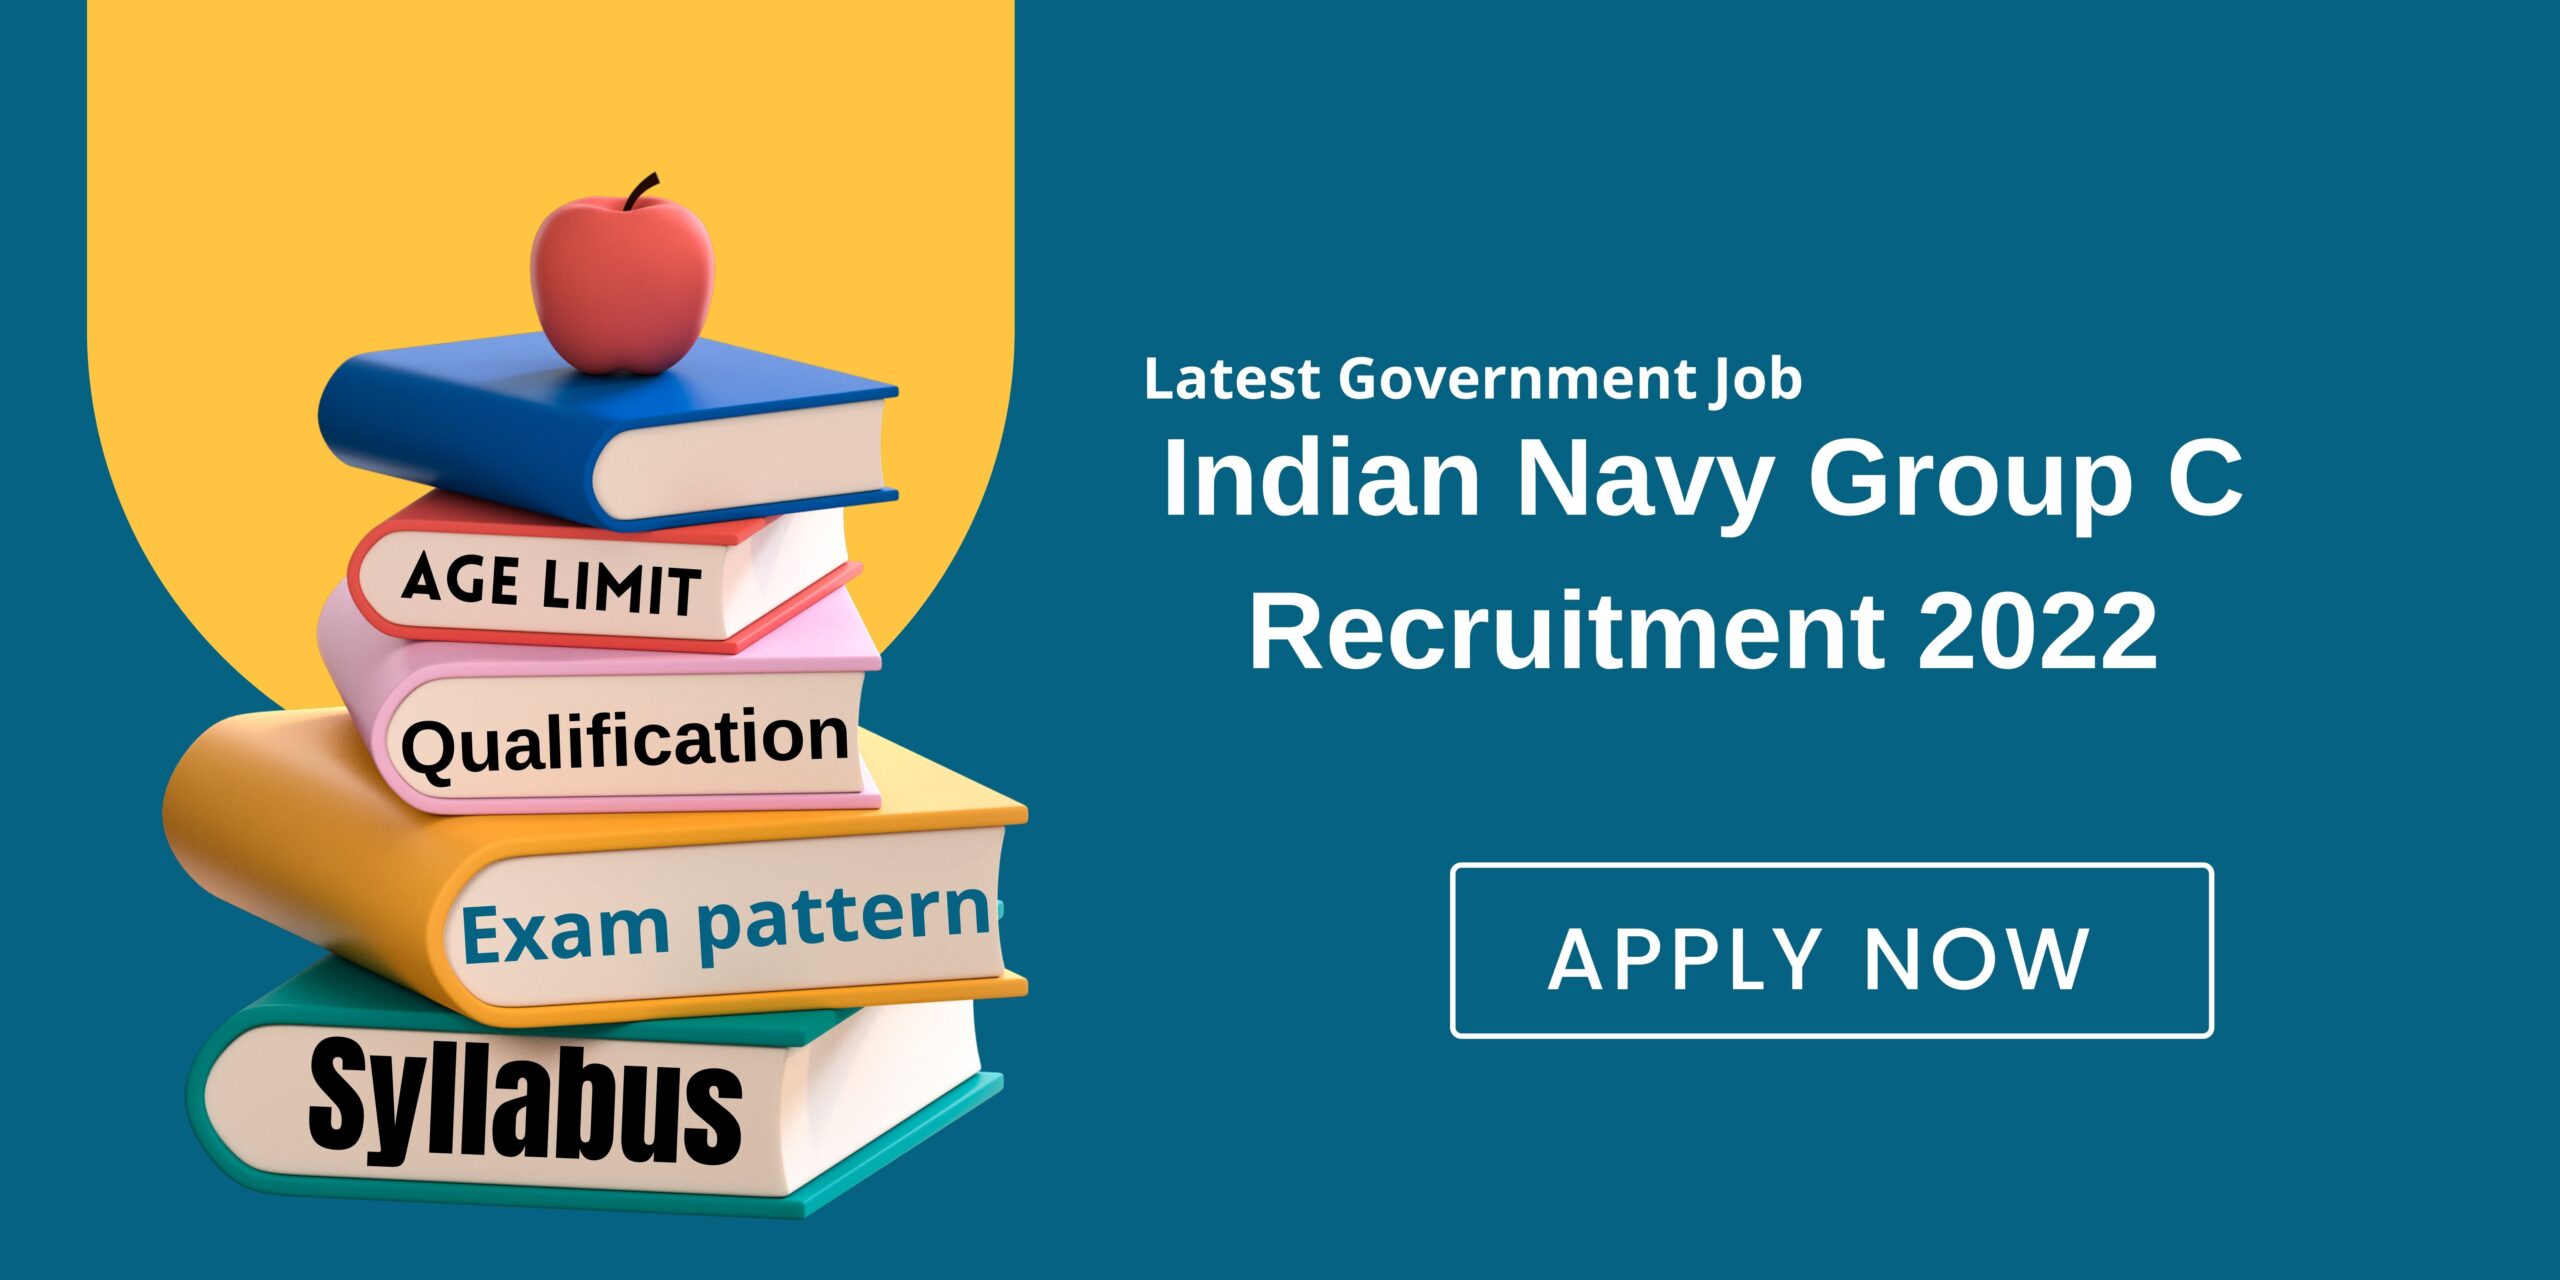 Indian Navy Group C Recruitment 2022